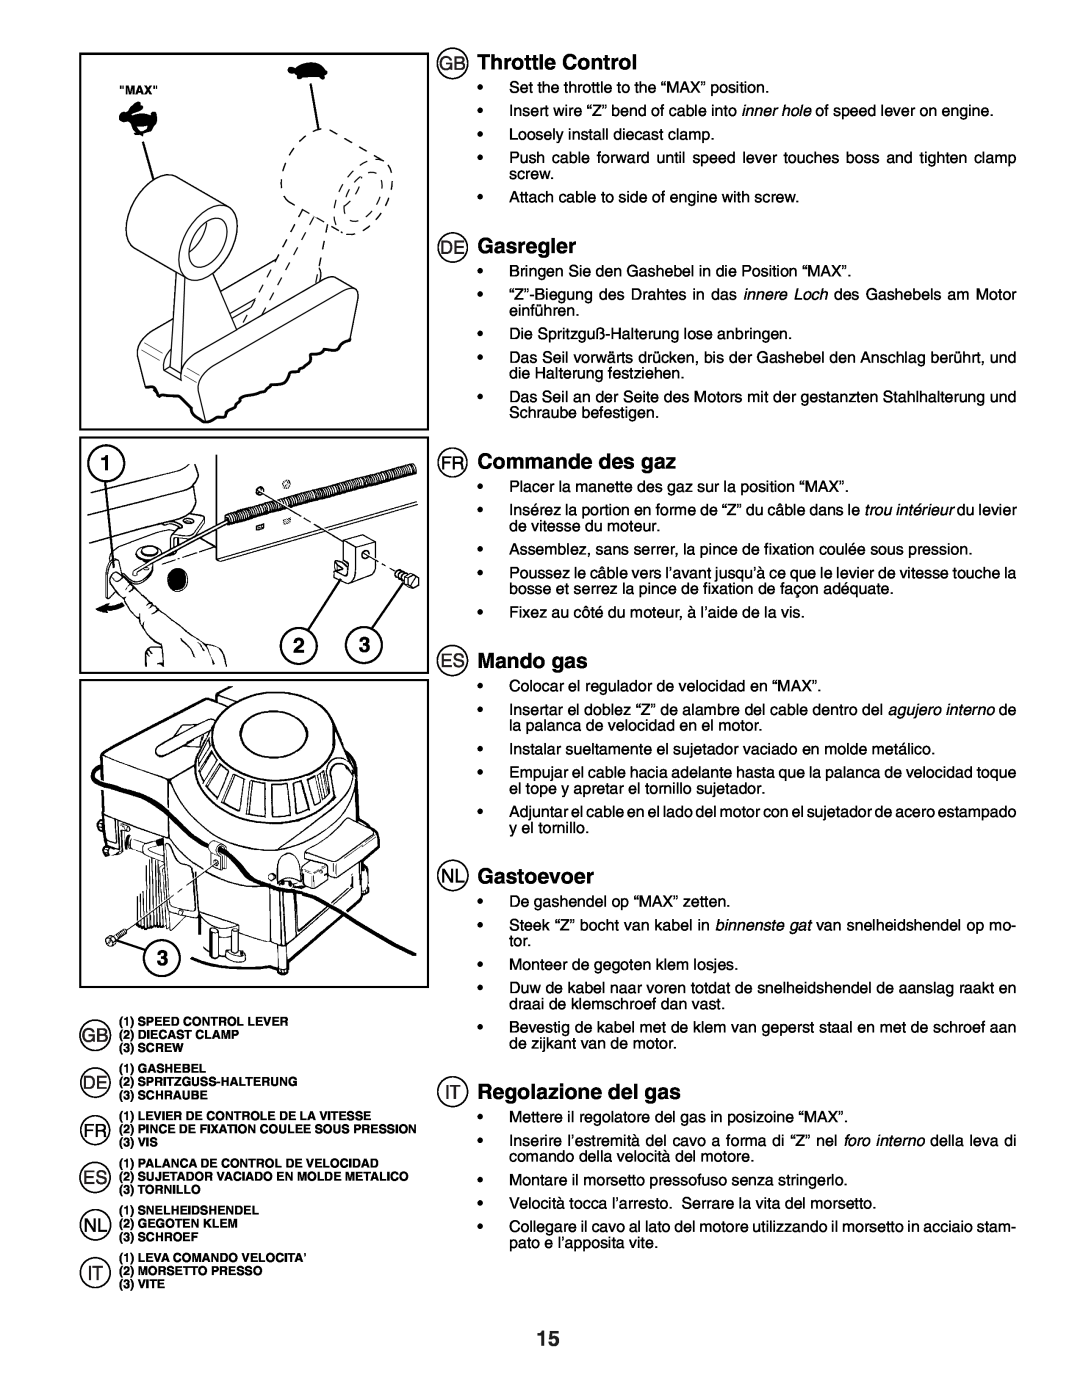 Husqvarna J50R instruction manual Throttle Control, Gasregler, Commande des gaz, Mando gas, Gastoevoer, Regolazione del gas 